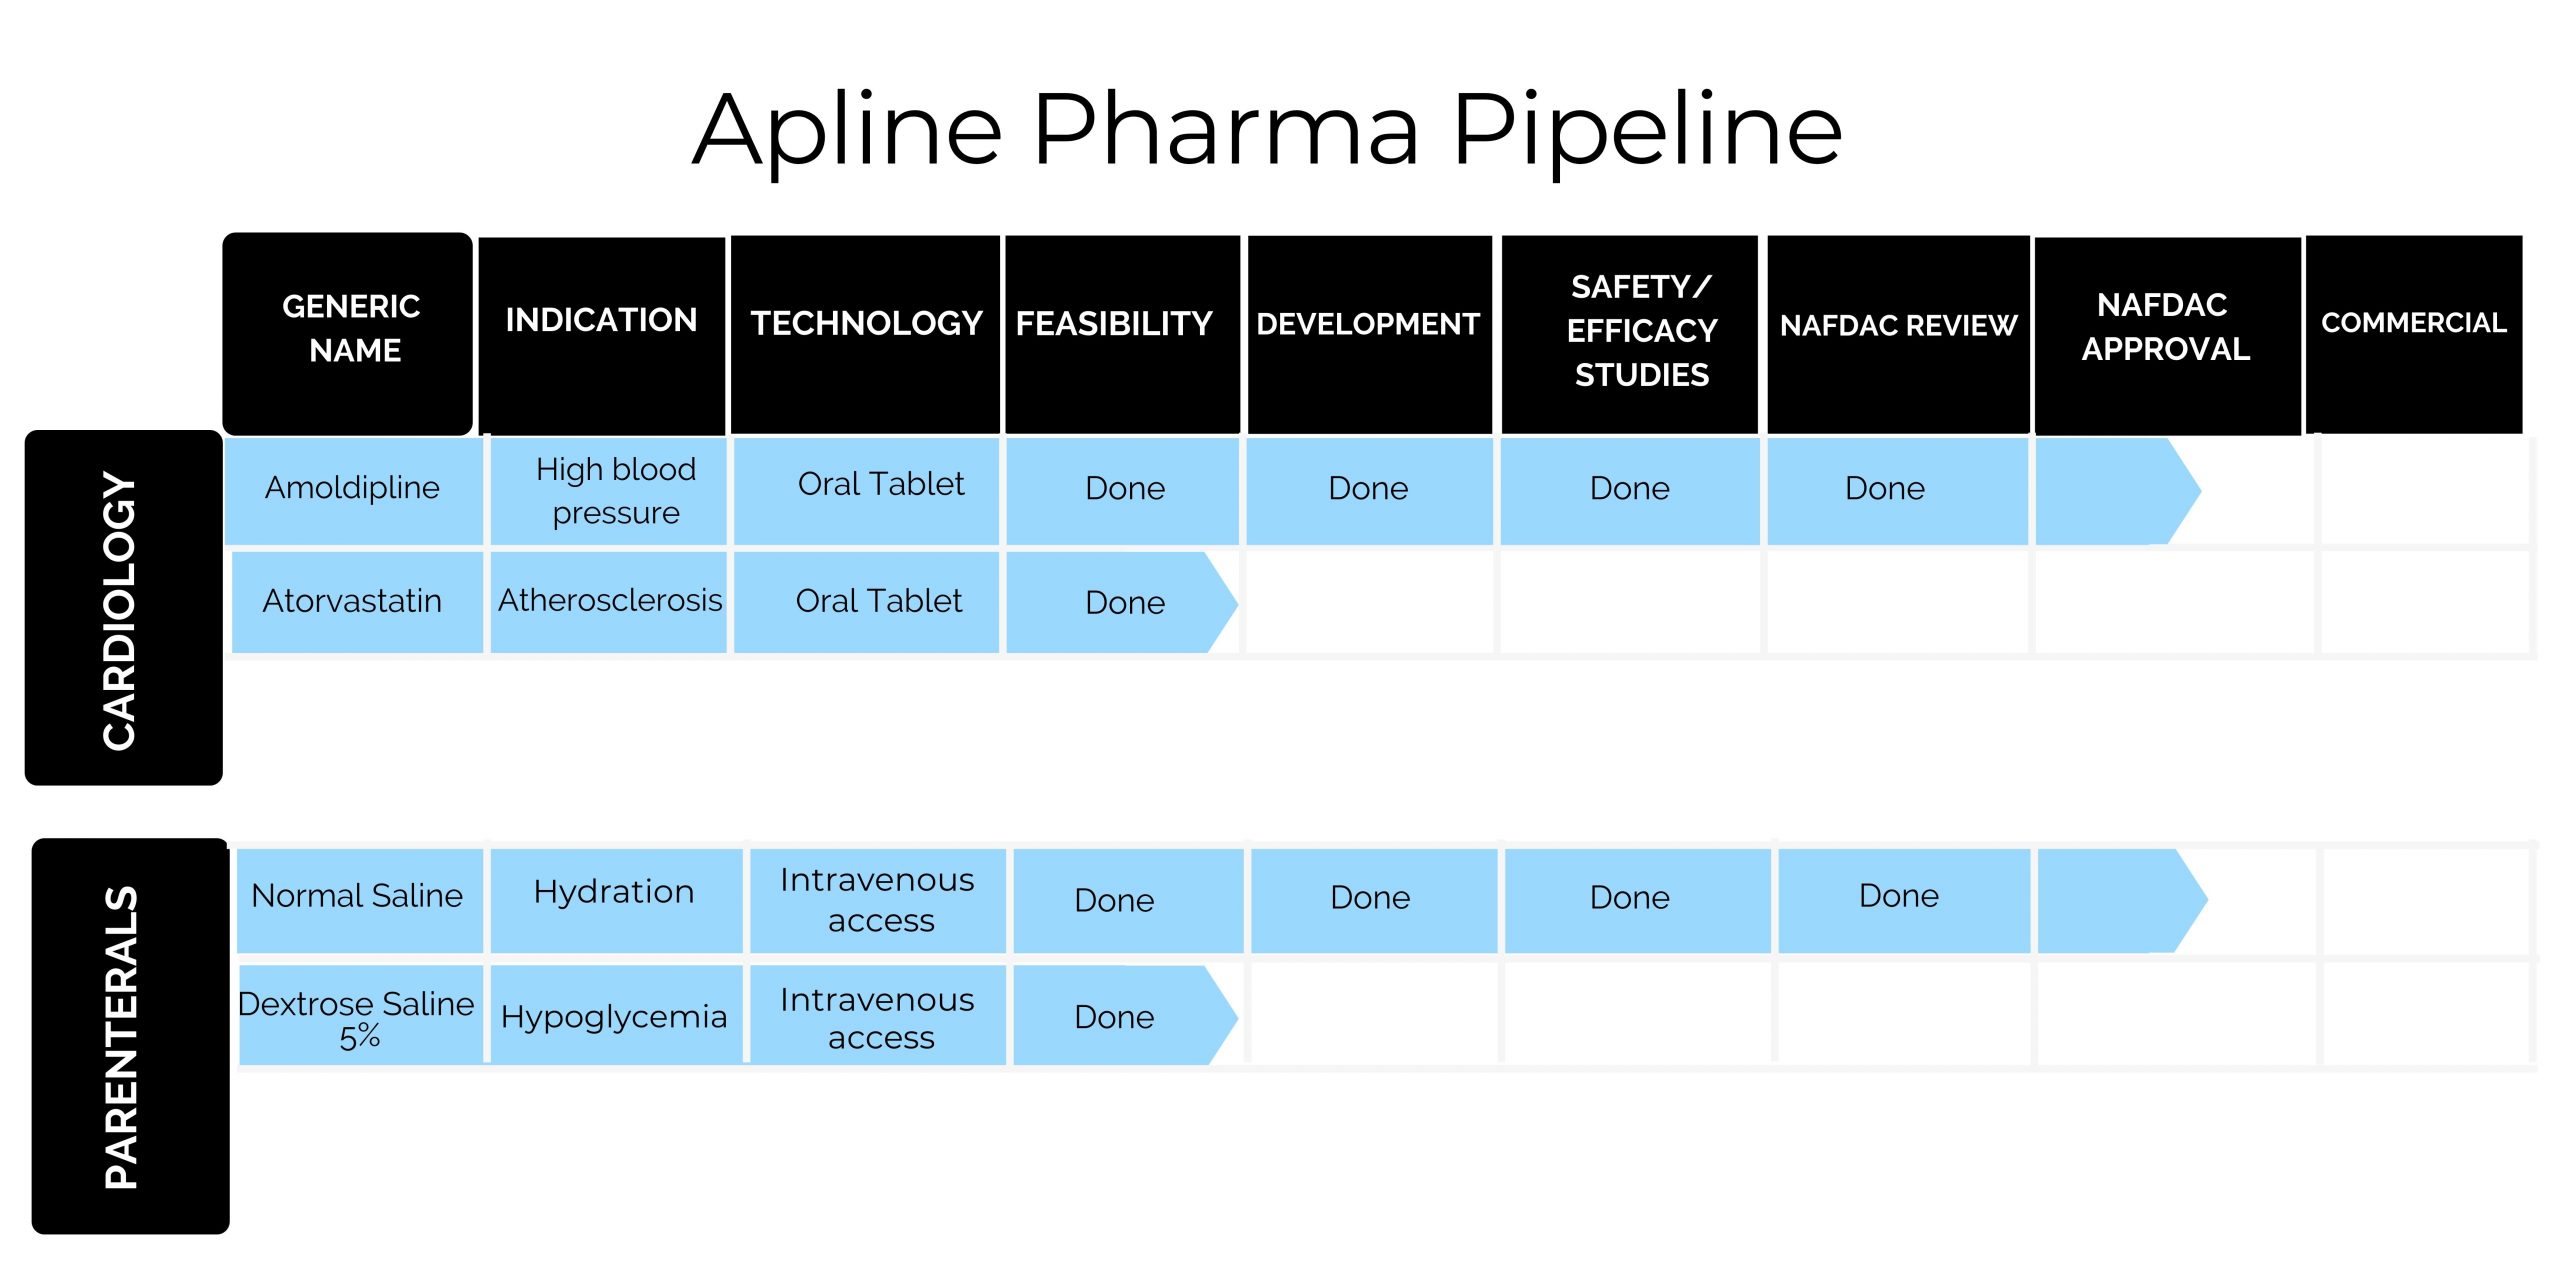 apline pharma